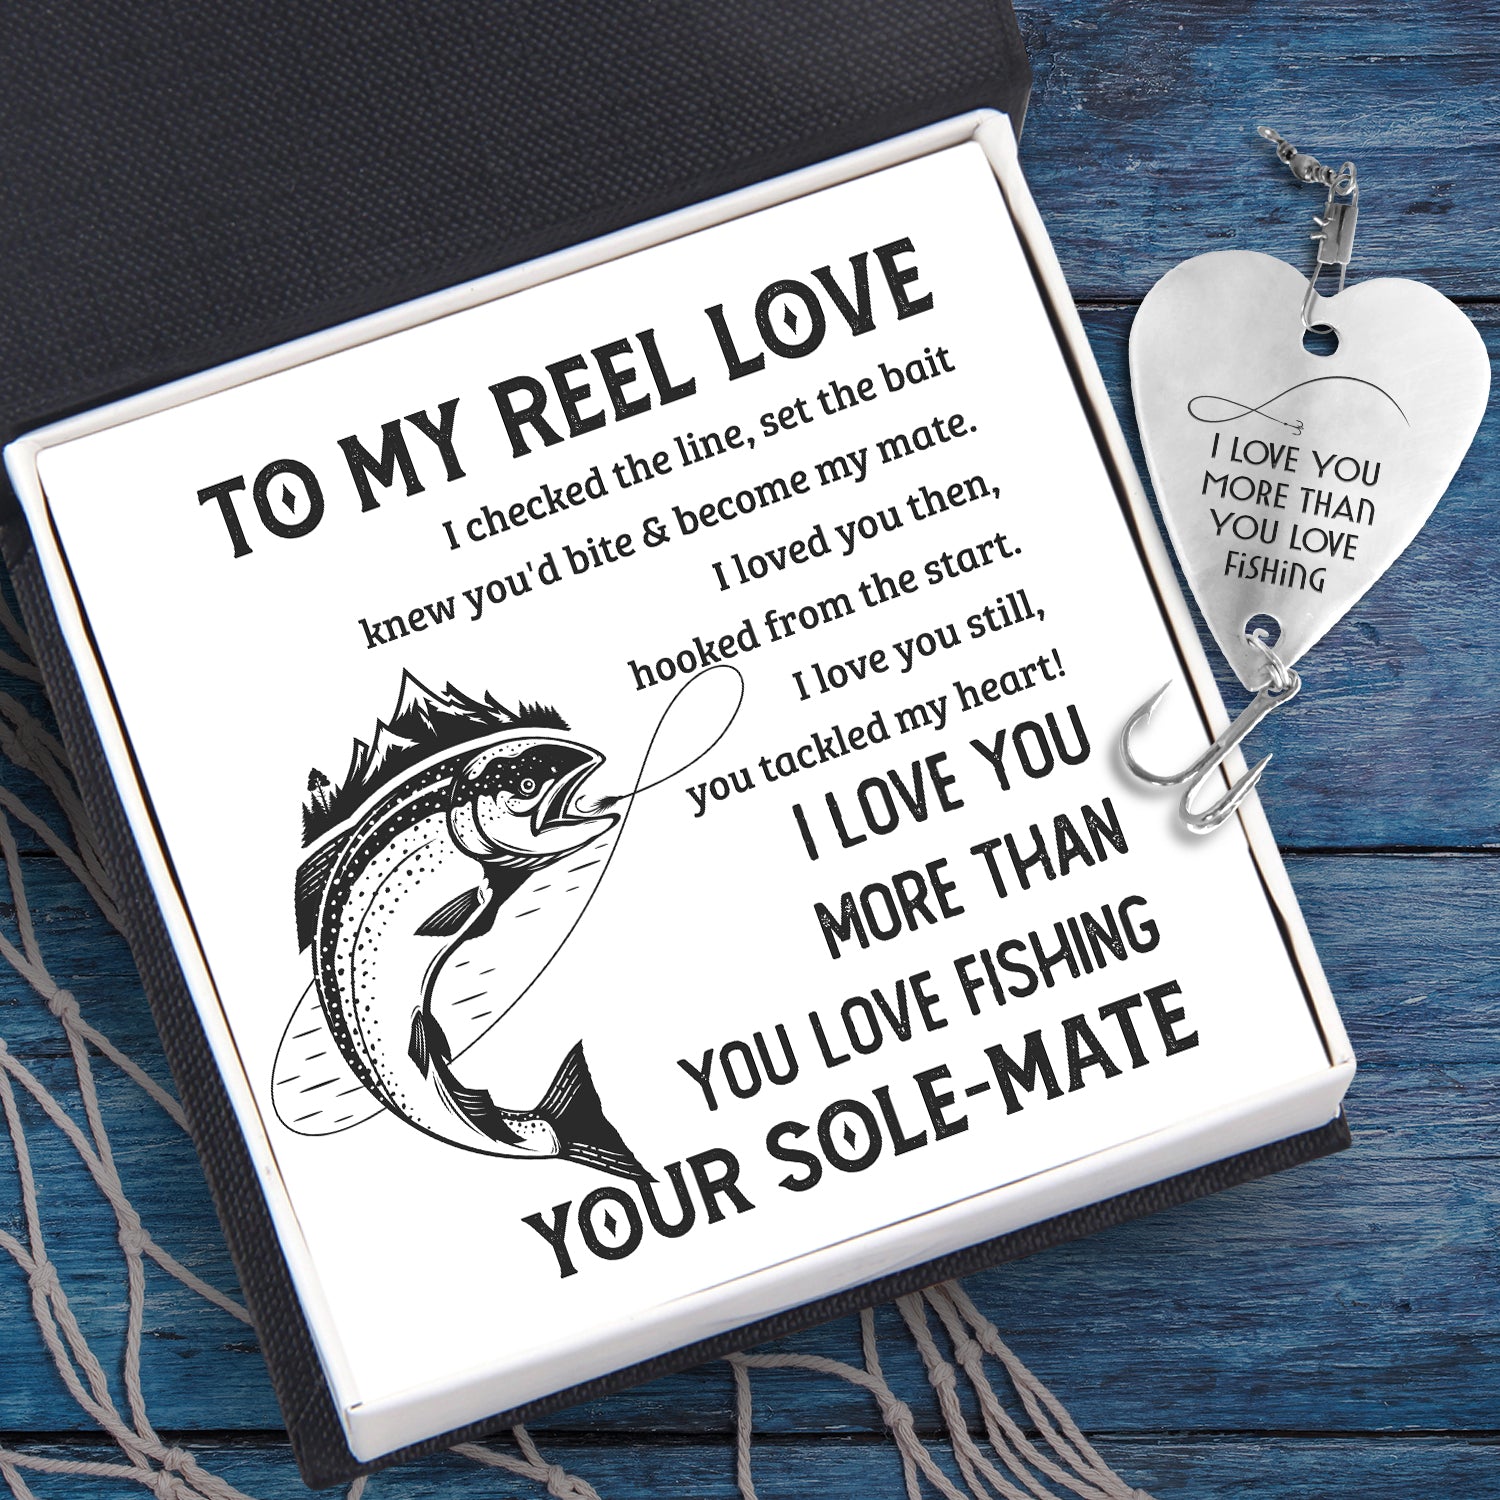 Heart Fishing Lure - Fishing - To My Reel Love - I Love You More Than You Love Fishing - Ukgfc13005